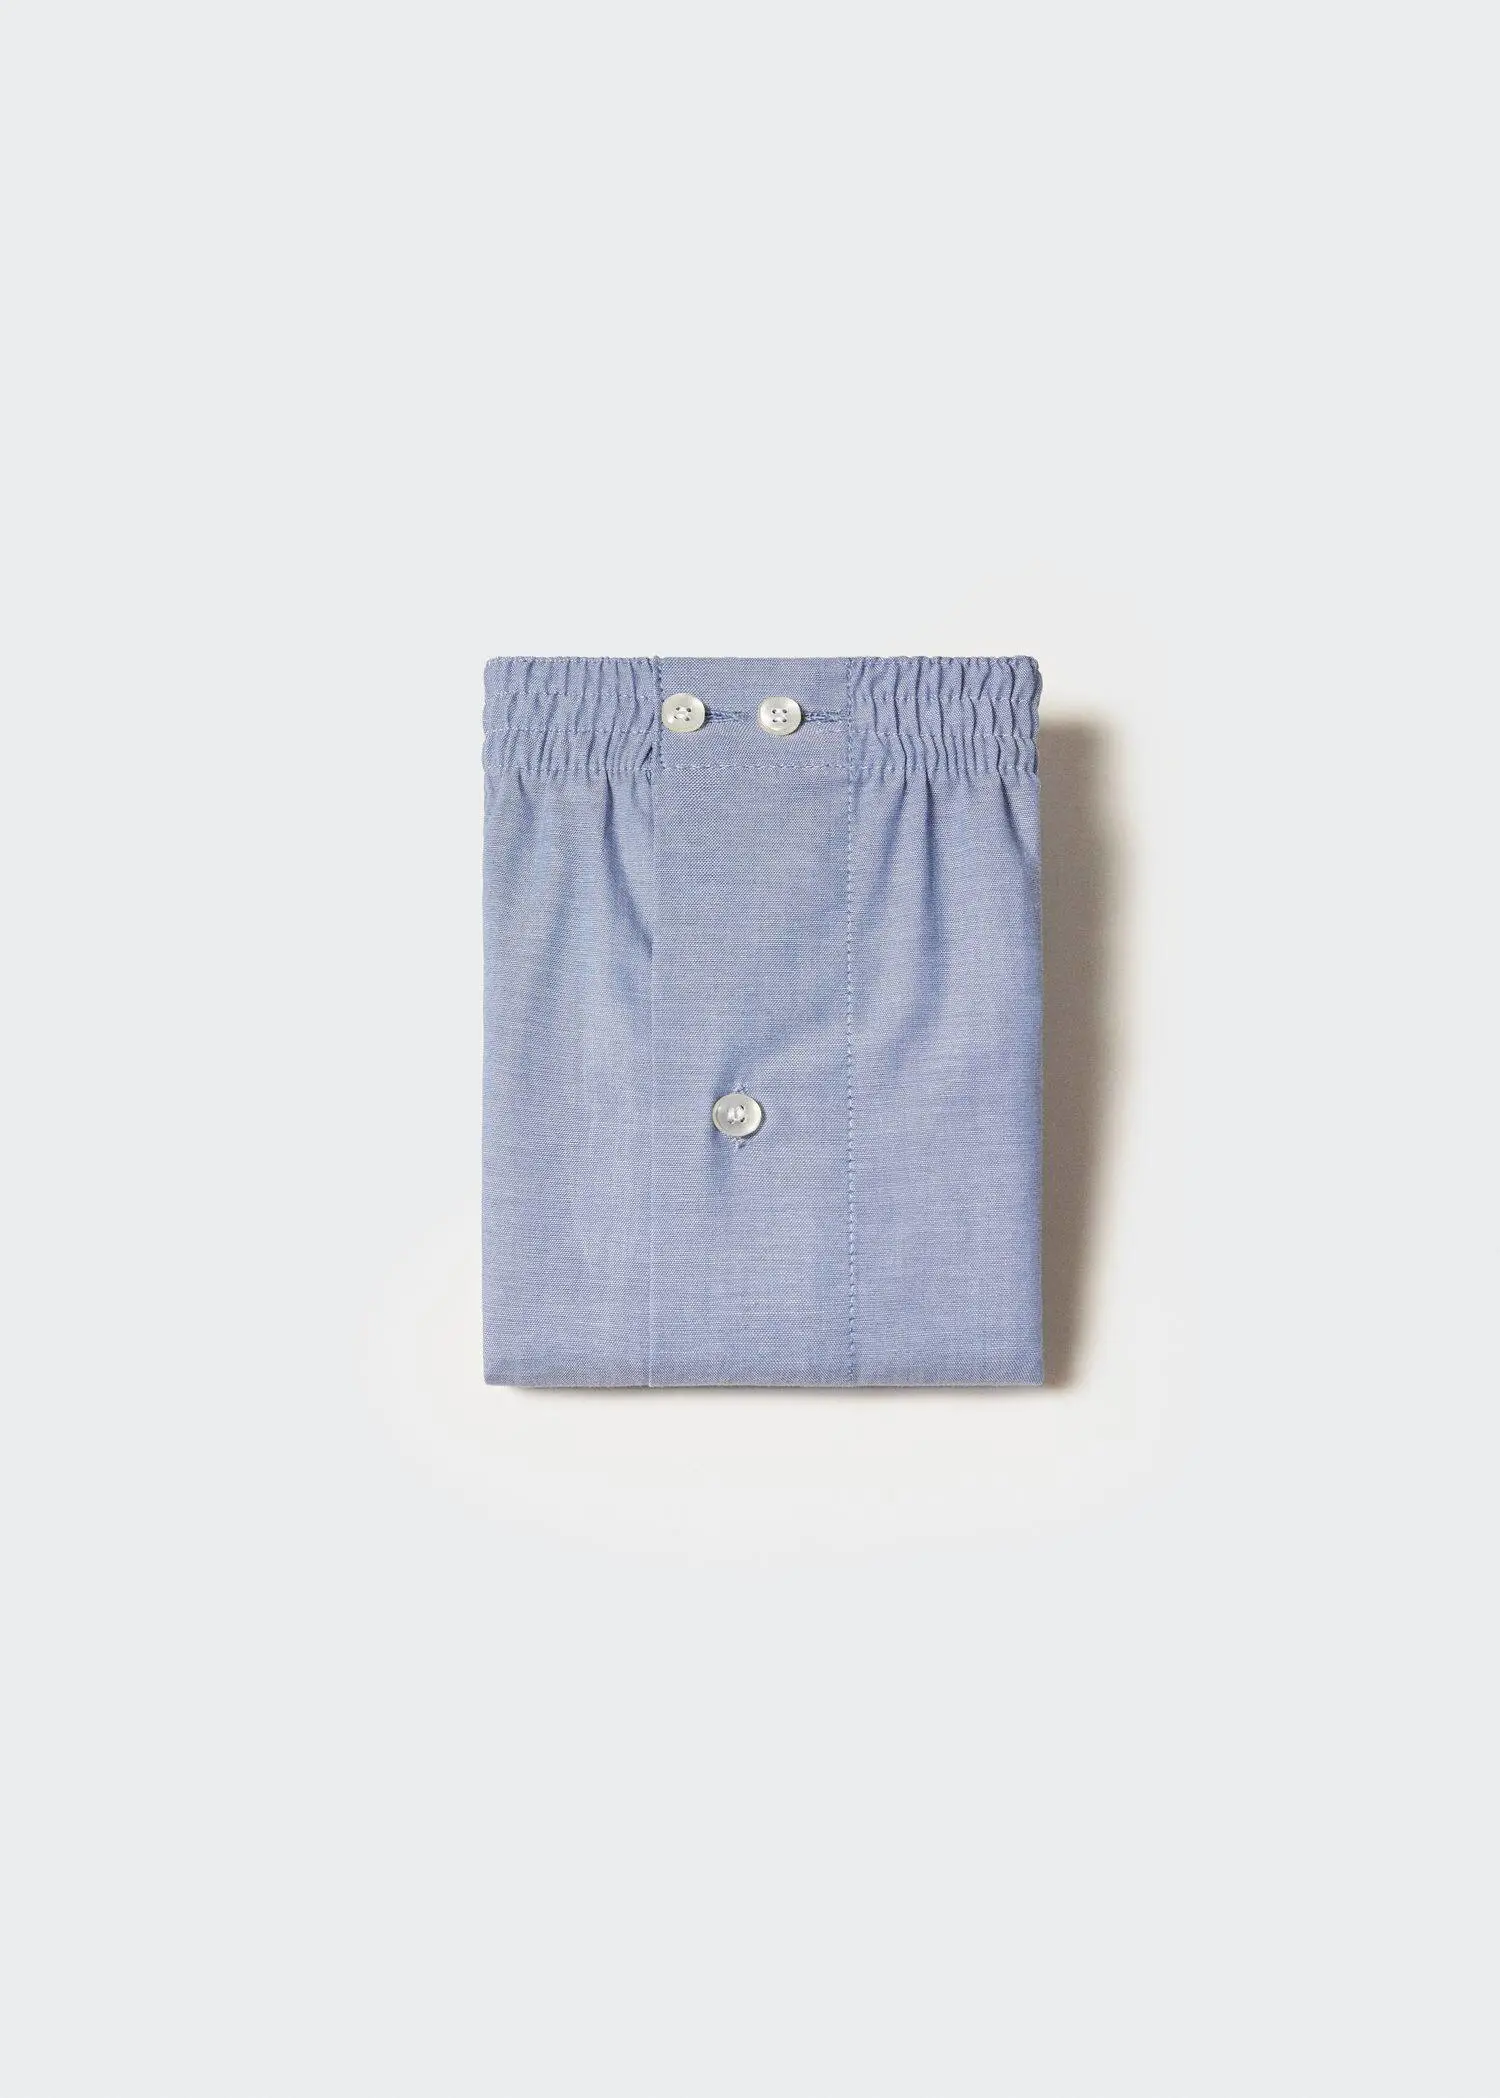 Mango 100% cotton plain briefs. a pair of blue boxer shorts on a white background. 